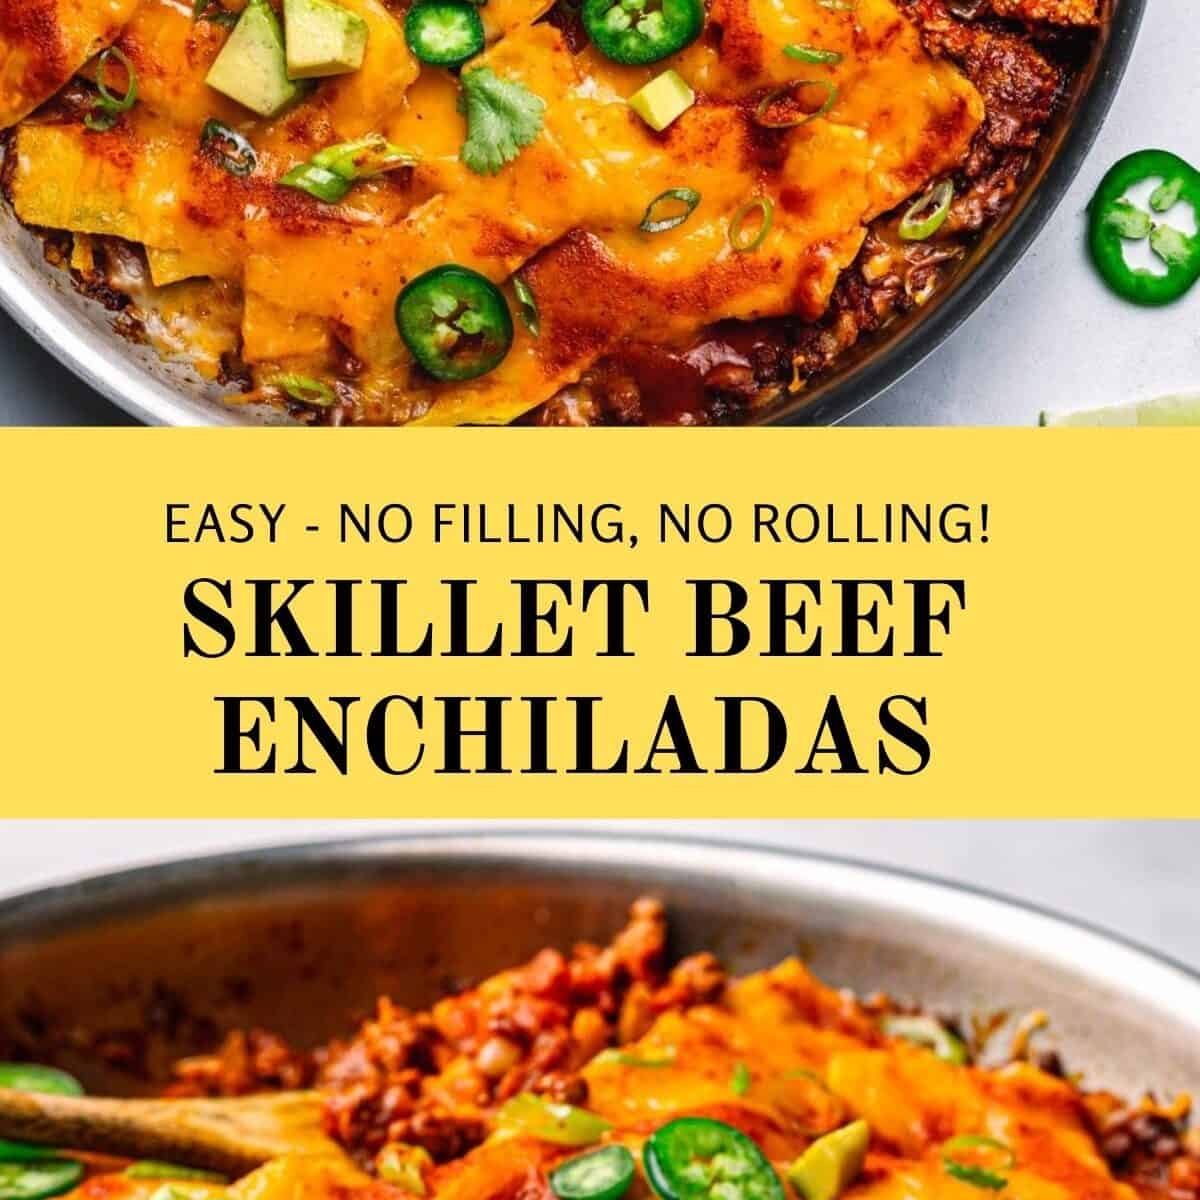 Skillet Beef Enchiladas